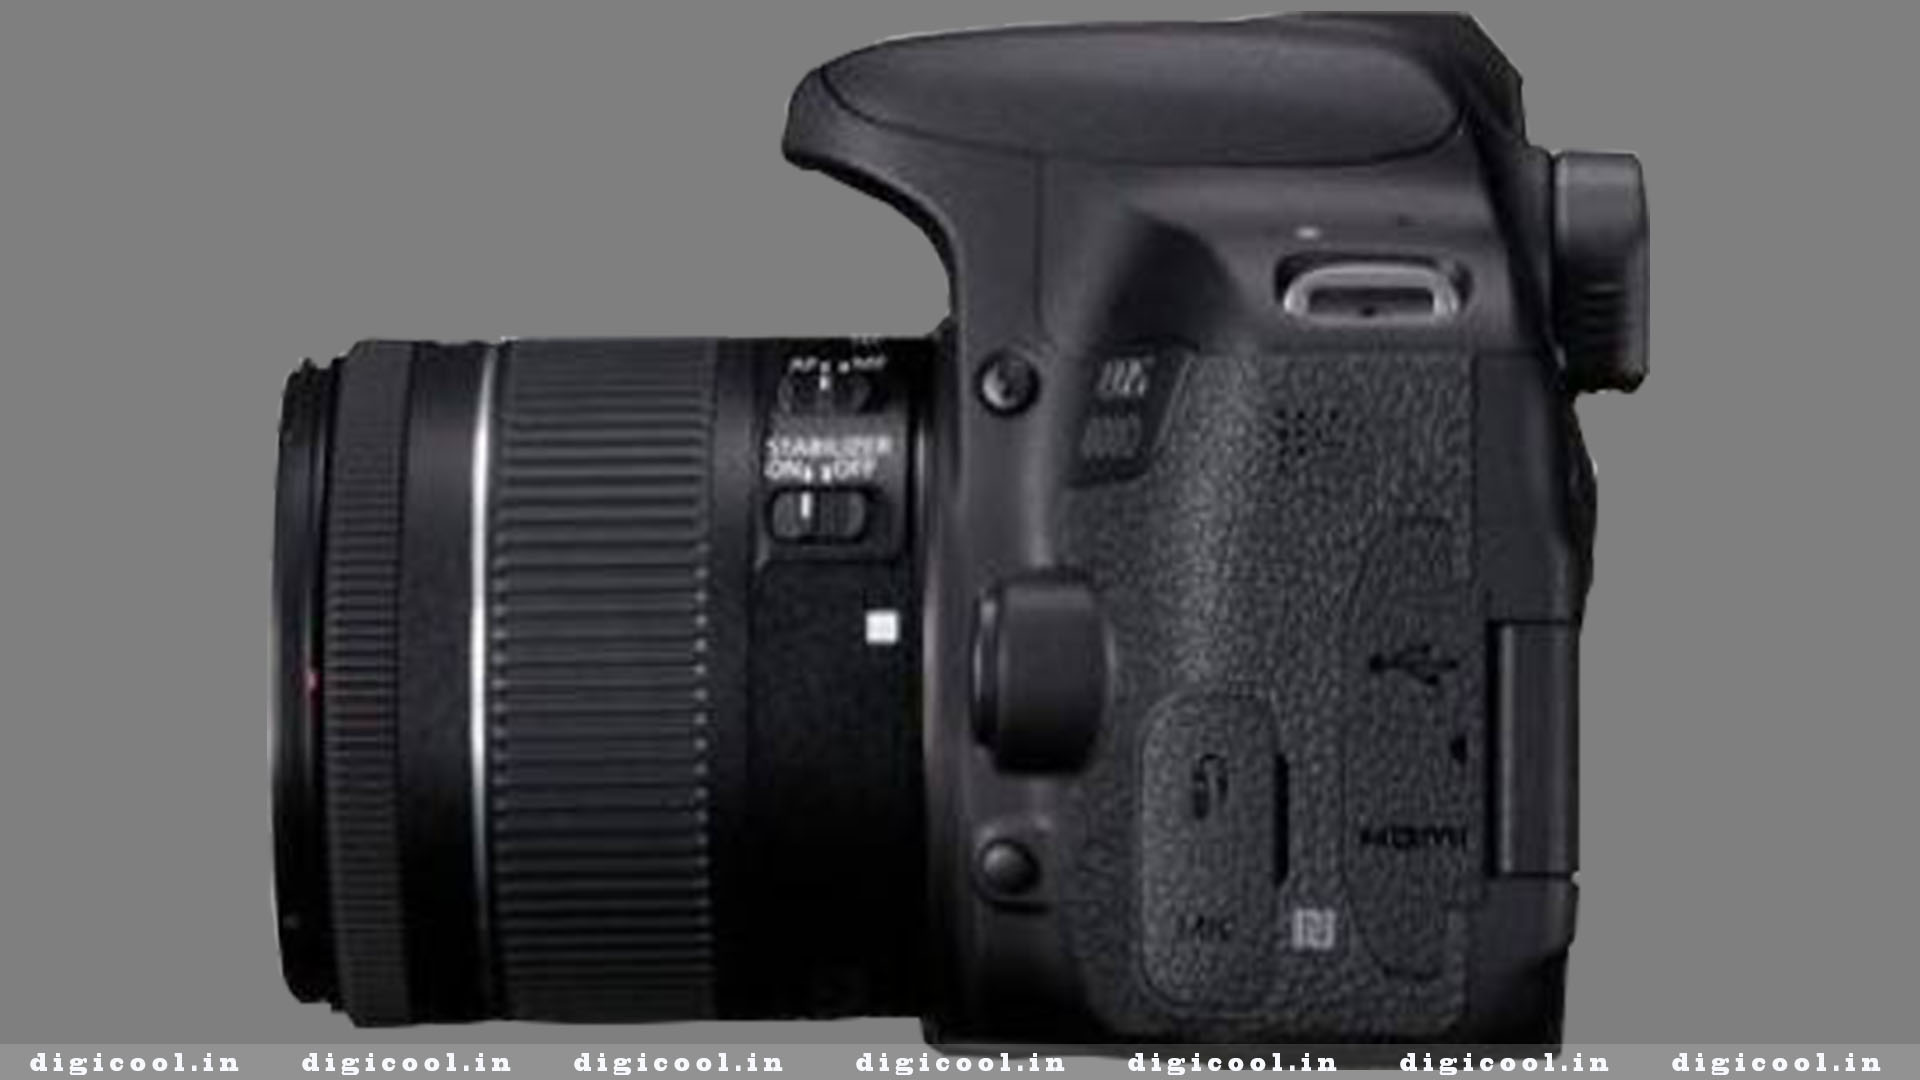 Eos 800d Dslr Camera Canon Eos 800d Dslr Camera India Review 